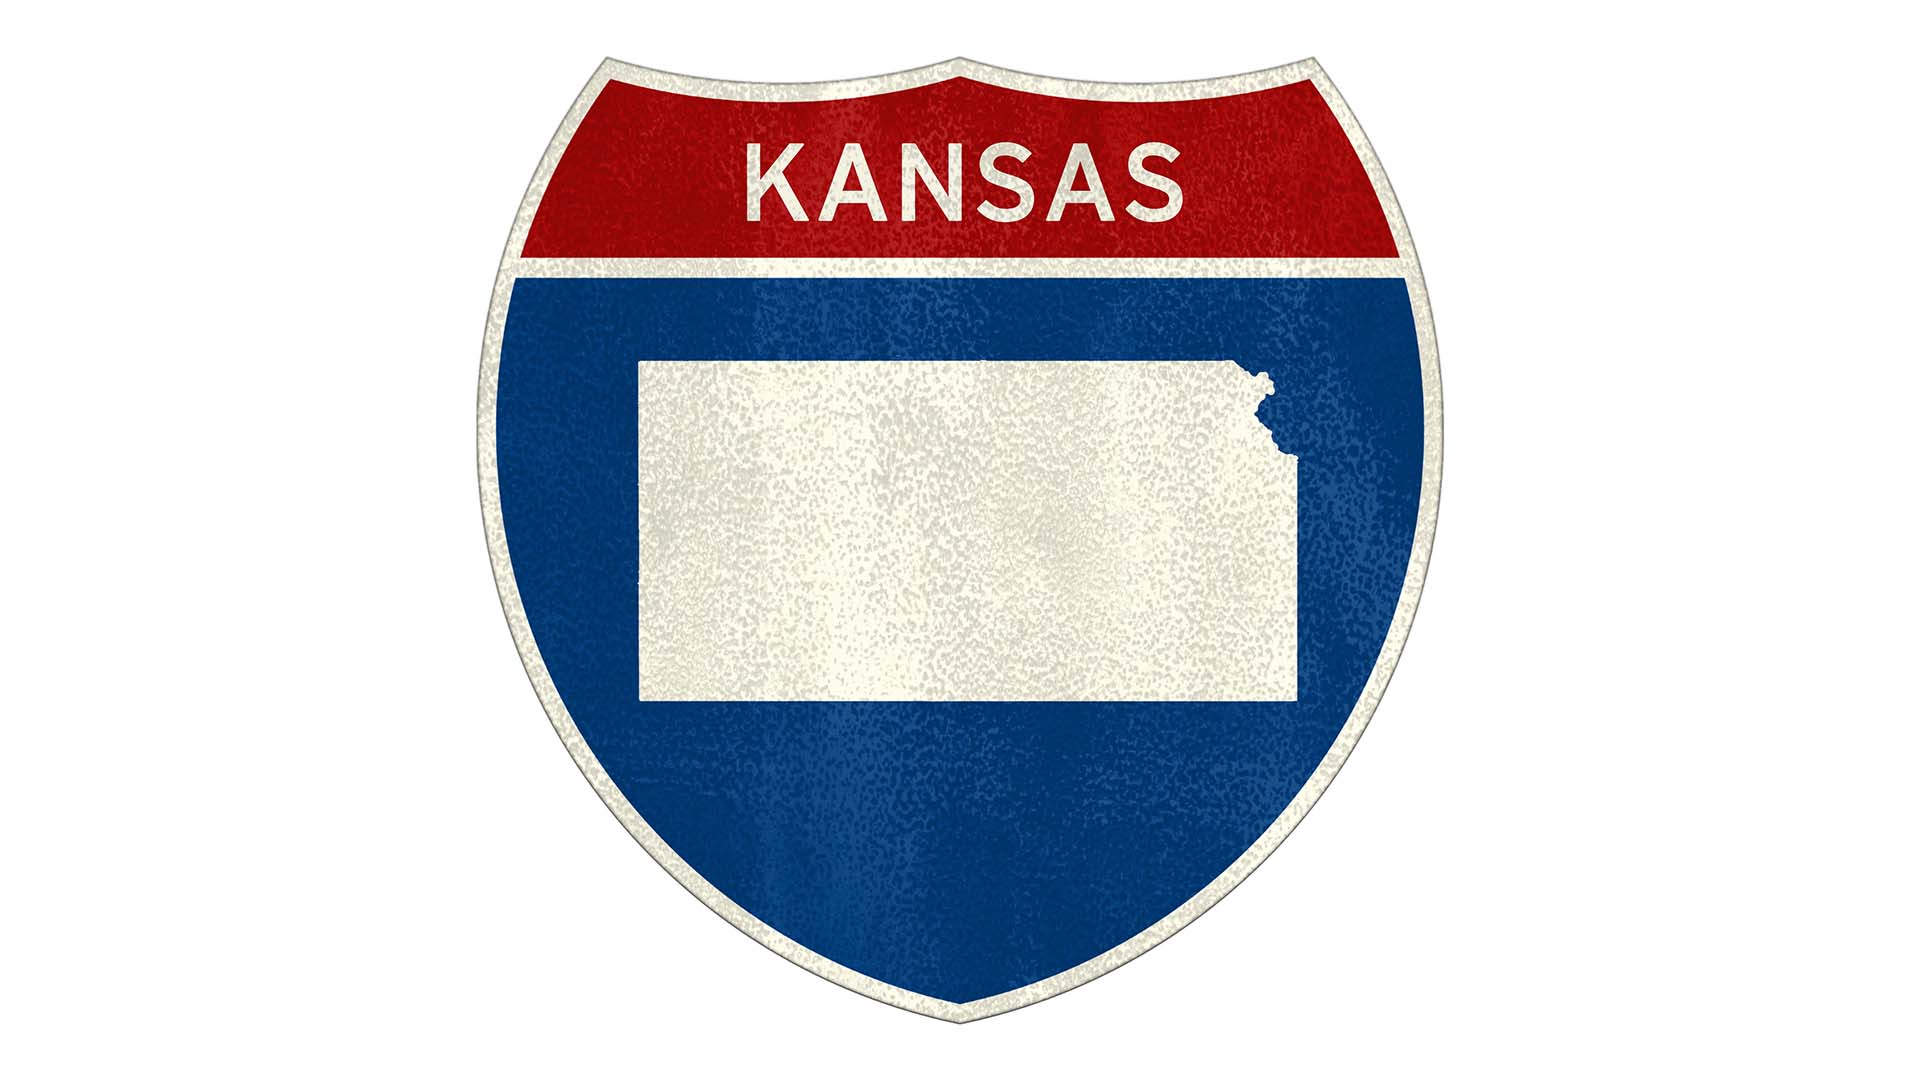 Kansas state roadside sign